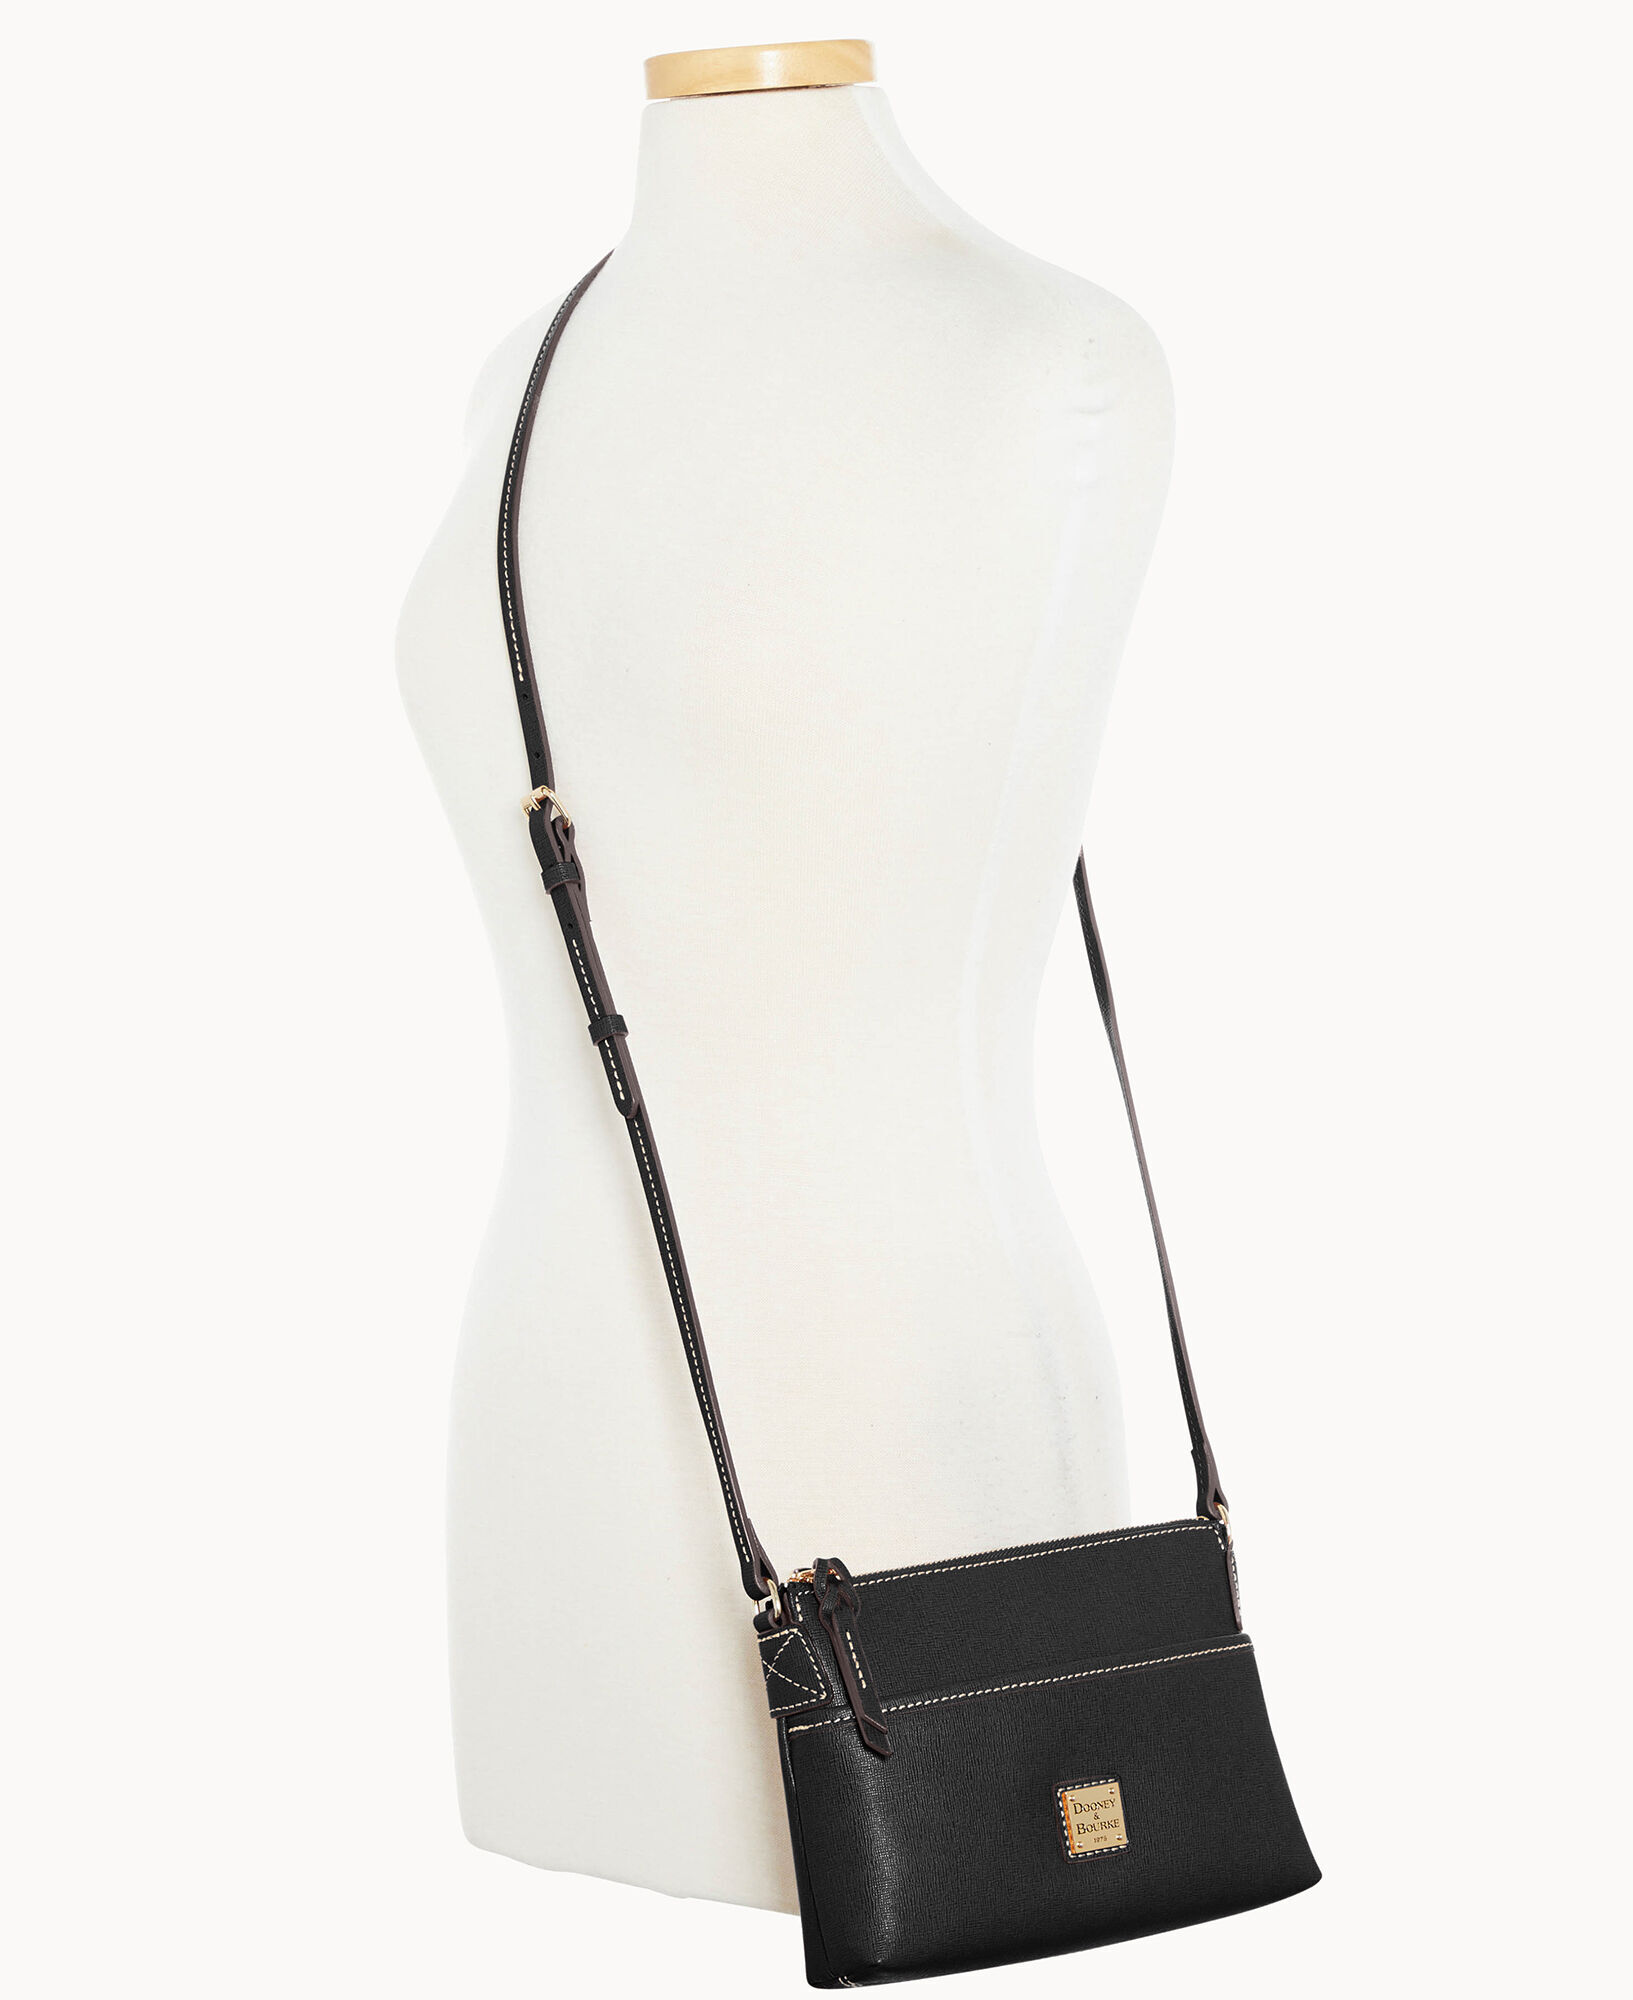 Dooney Bourke Saffiano Collection Pouchette Crossbody Bag - Black